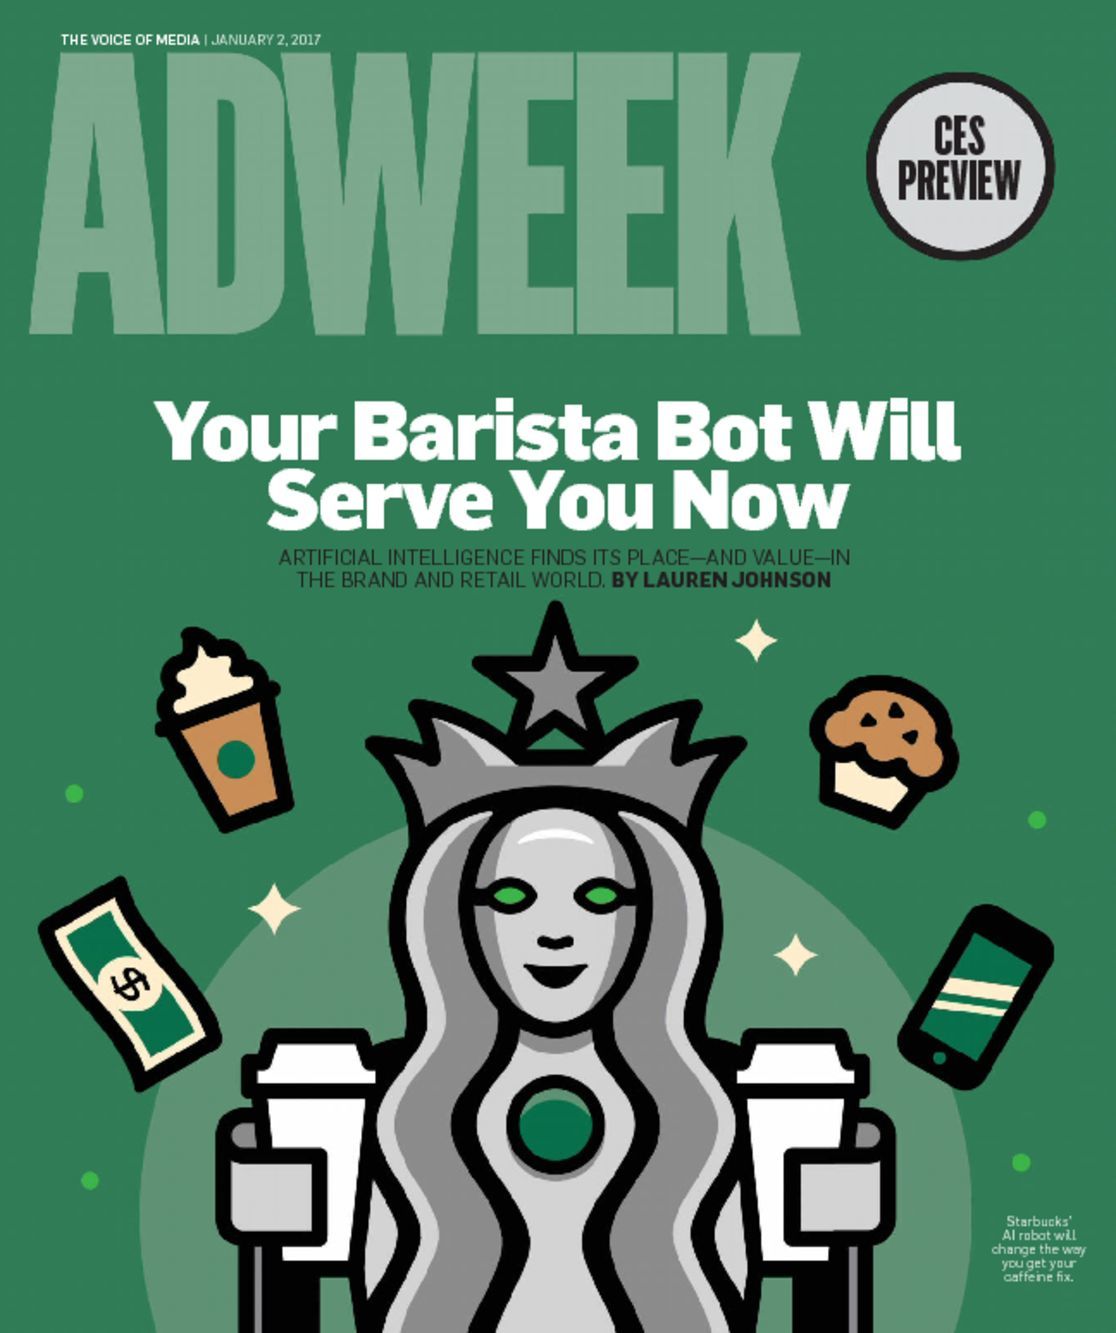 Adweek Magazine